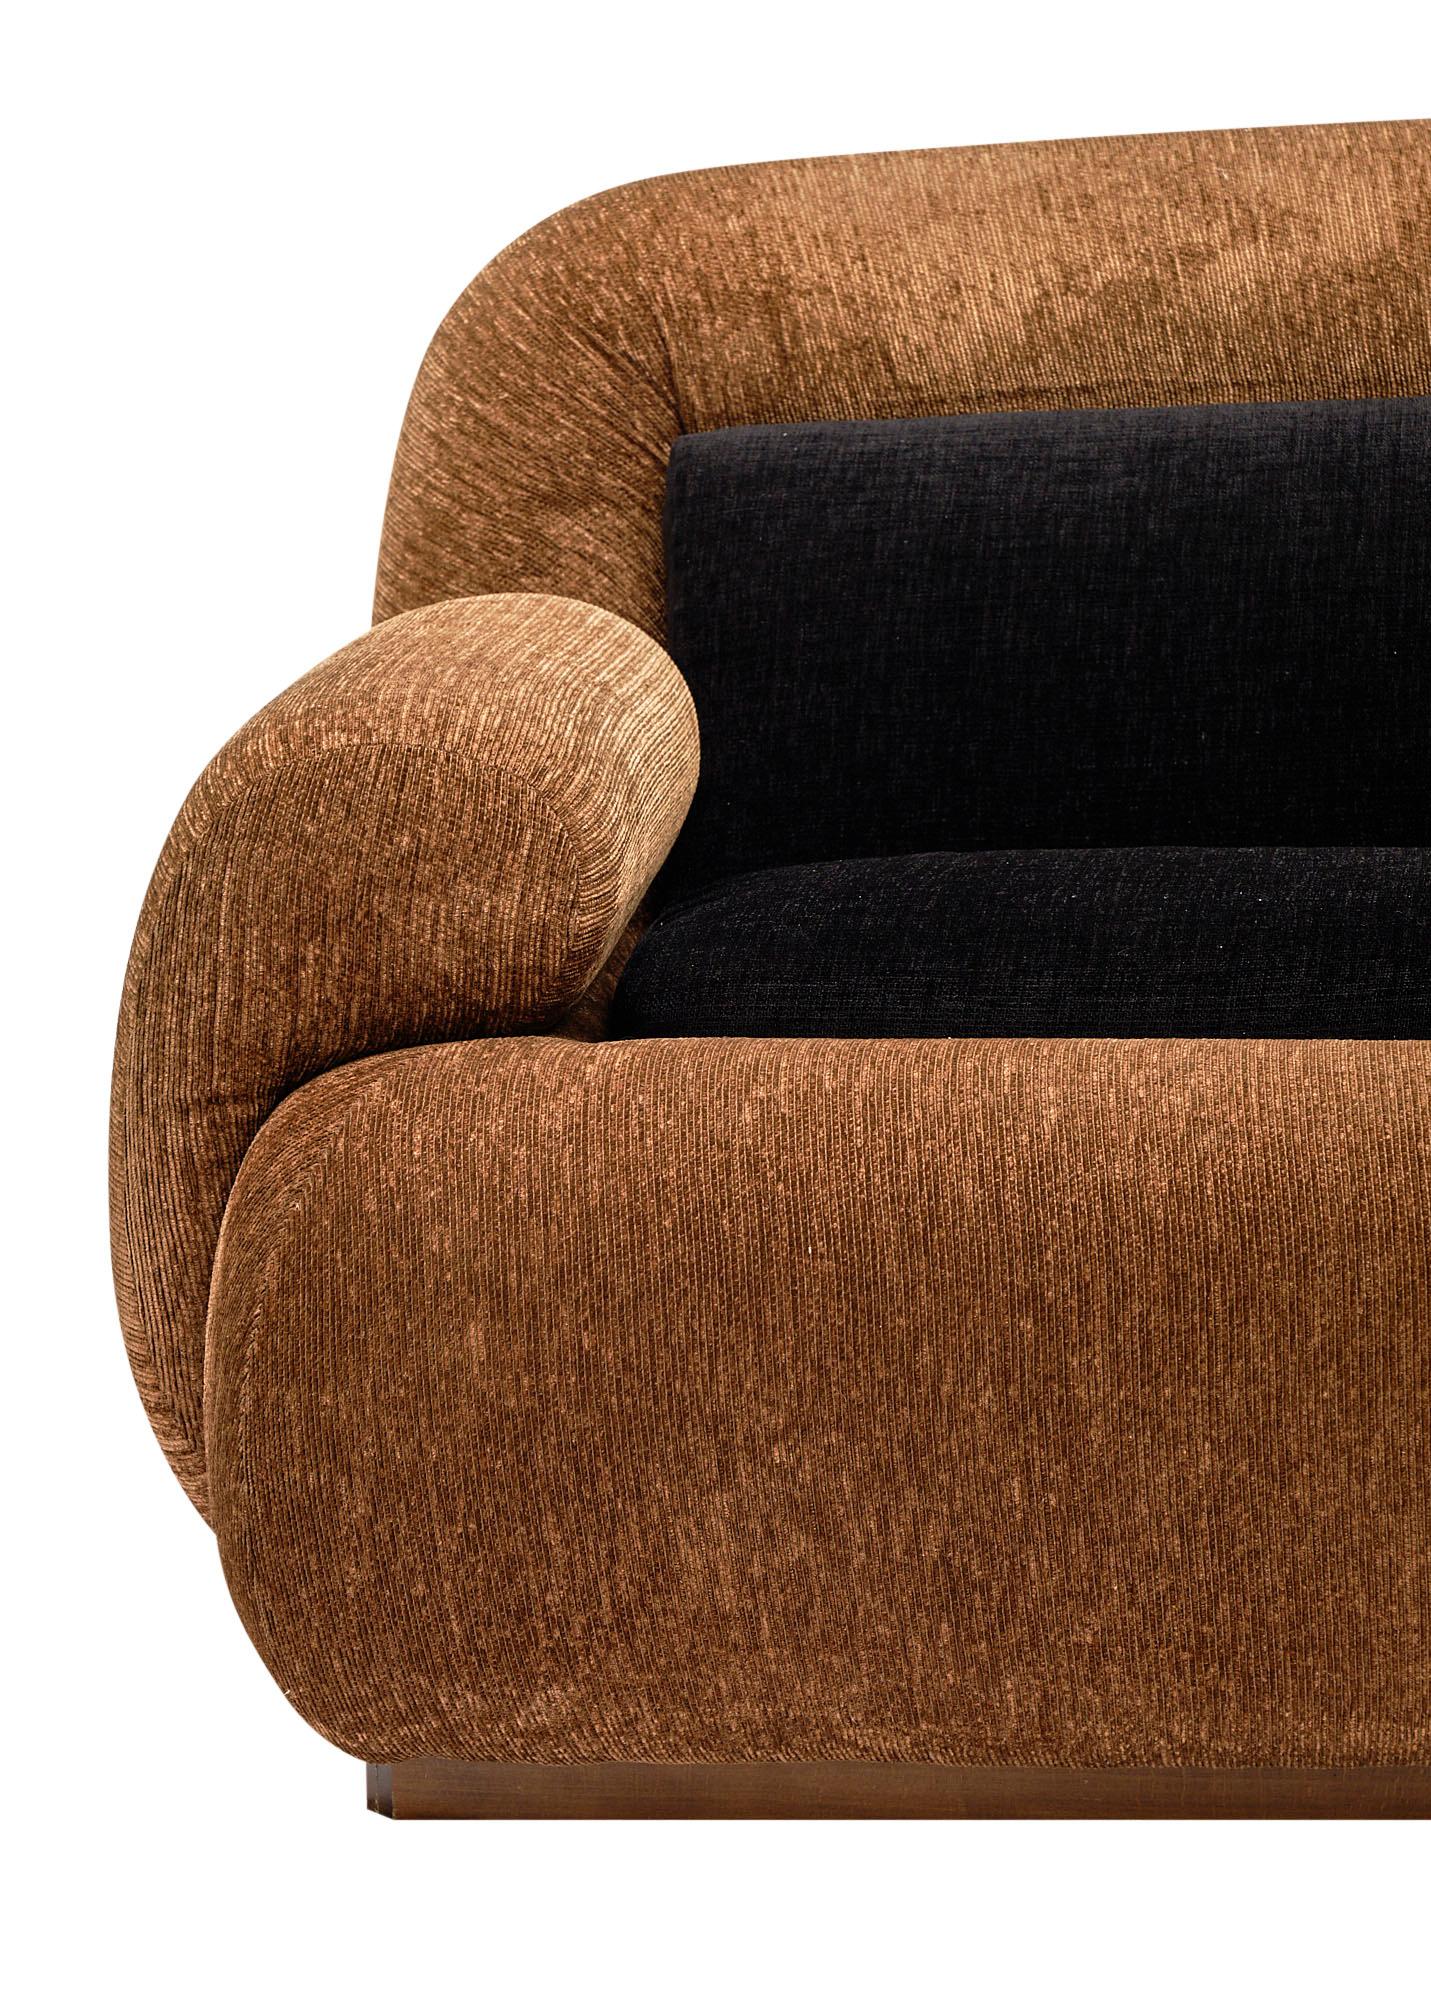 Upholstery Italian Mid-Century Modern Sofa For Sale